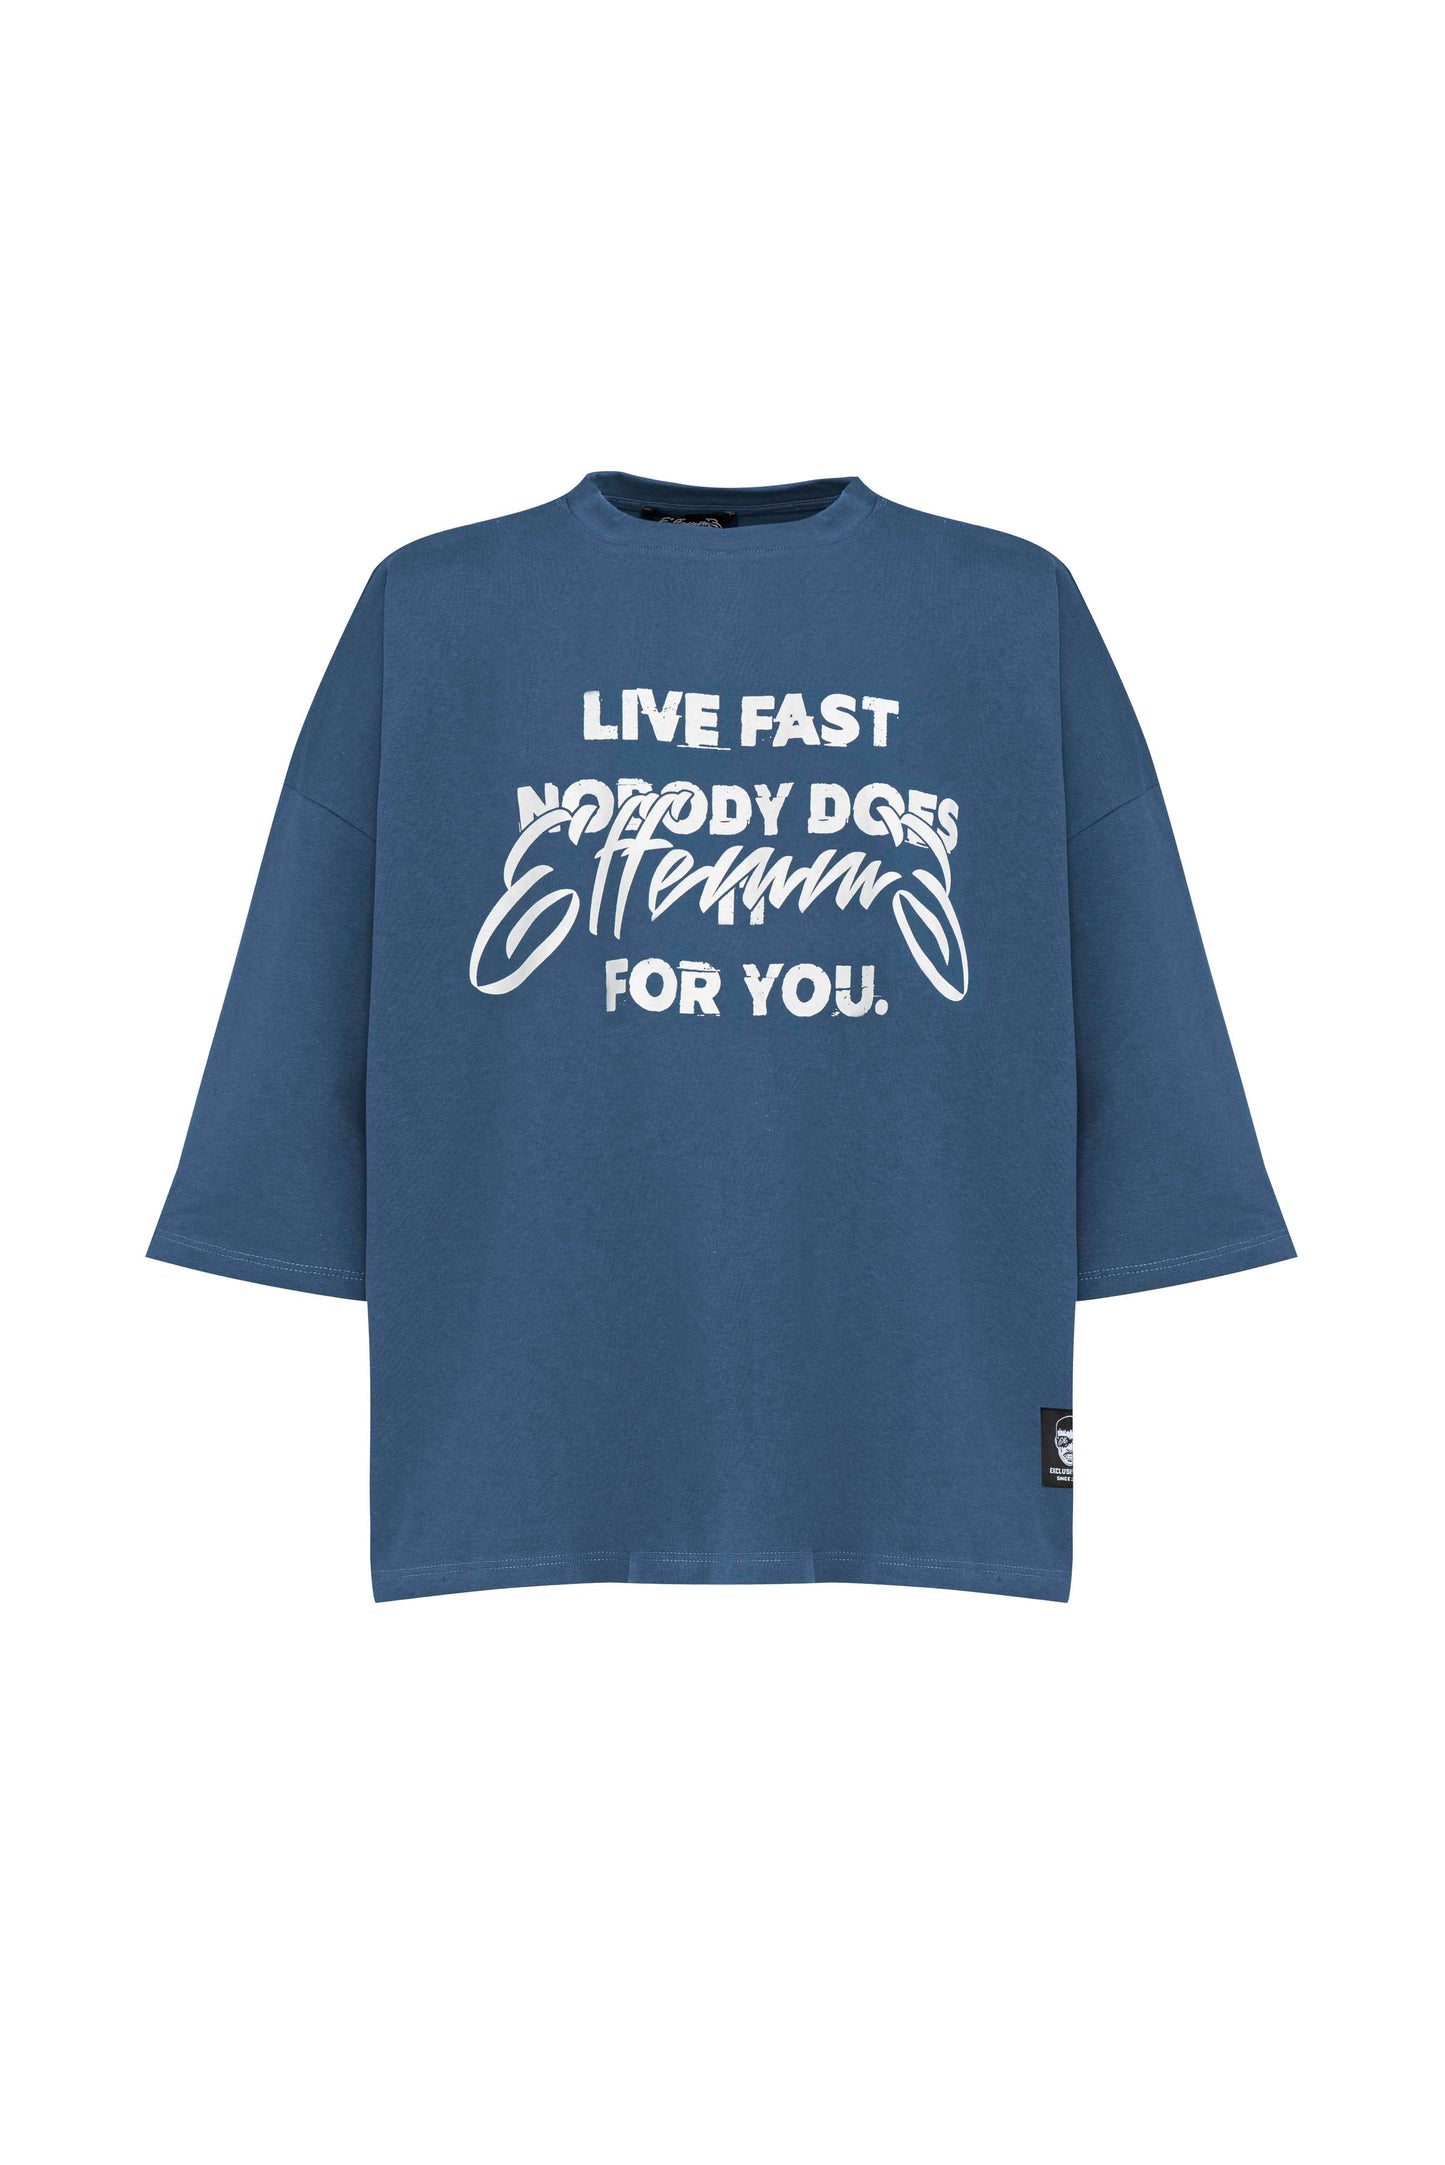 Live Fast camiseta azul petróleo